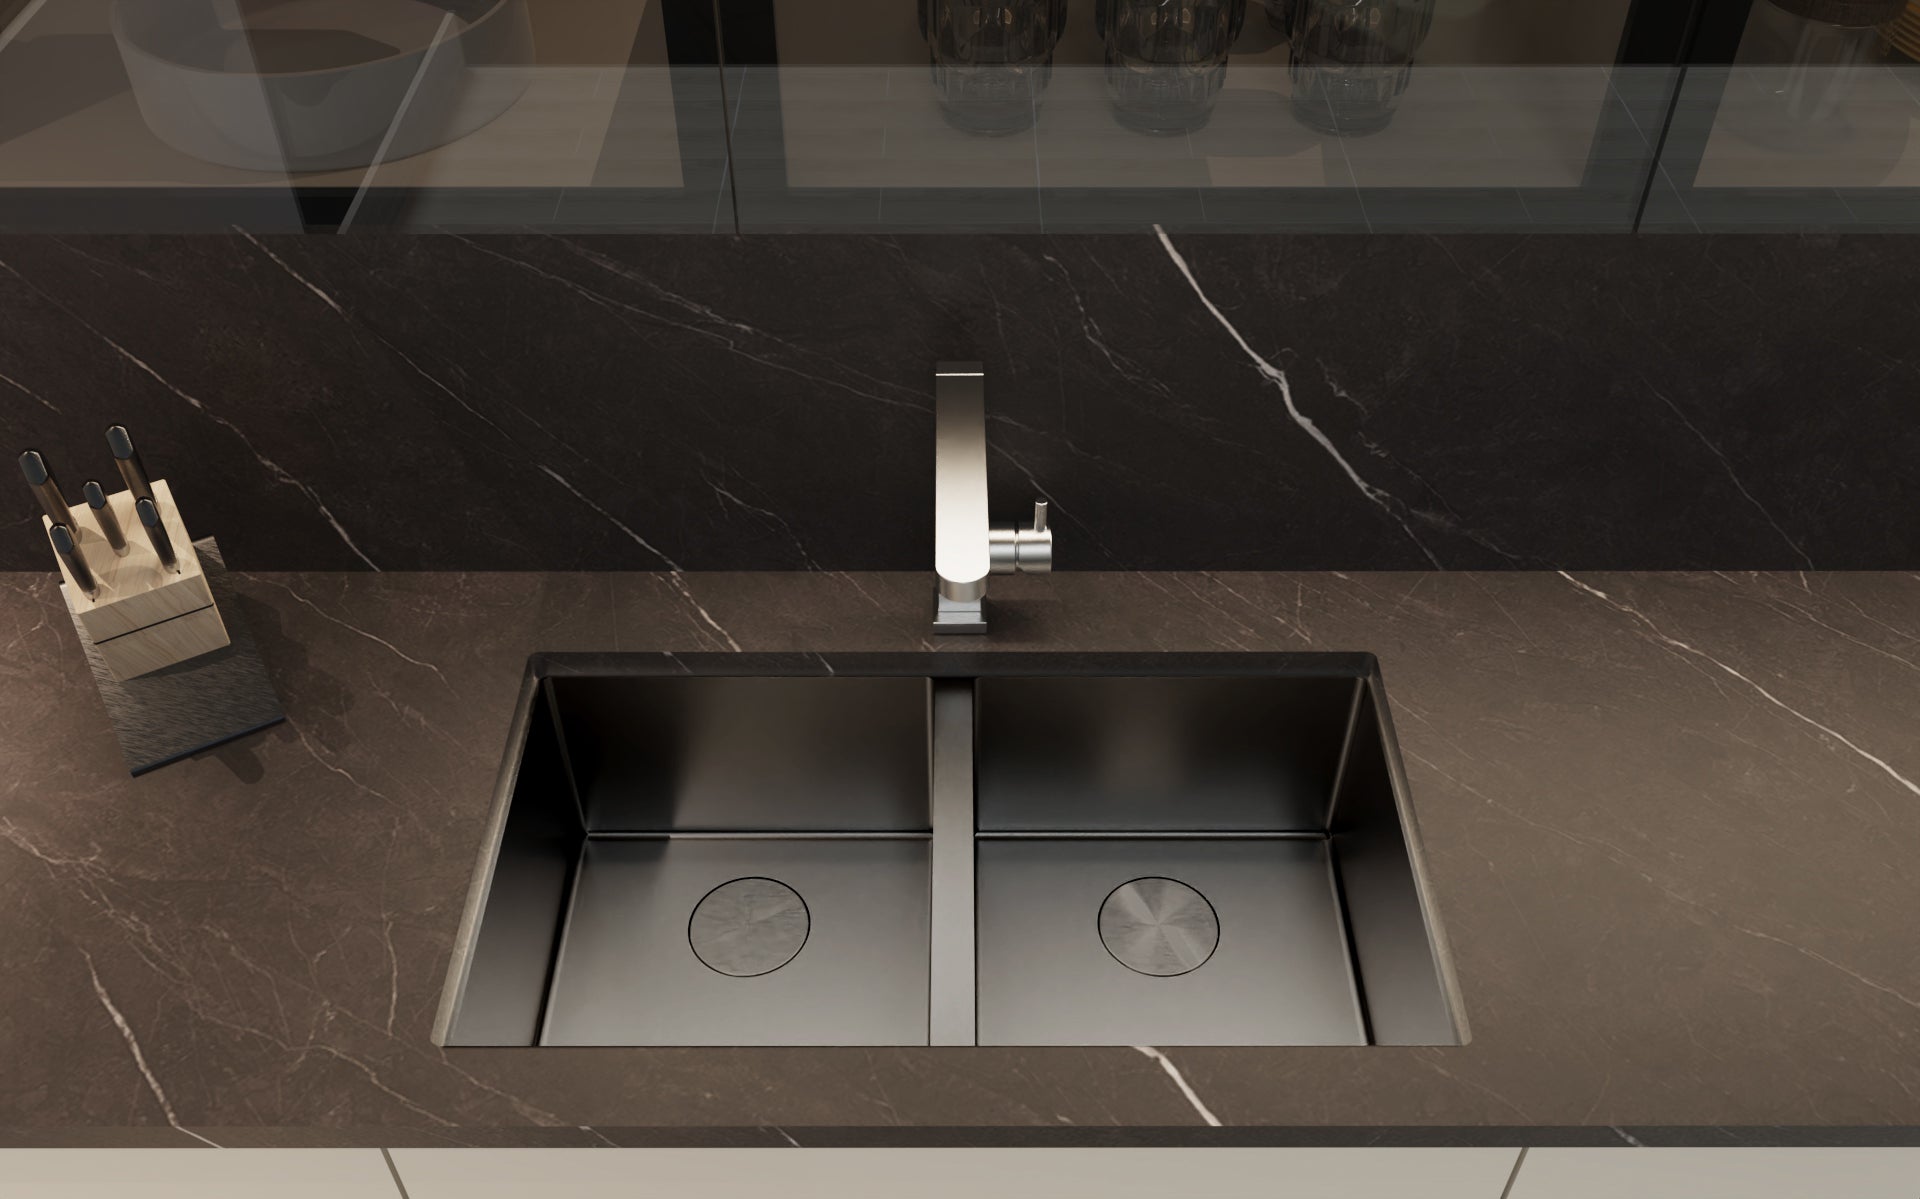 DAX Handmade Nanometre Double Bowl Undermount Kitchen Sink - Black Stainless Steel 304 - 32 x 18 (DX-NB3218-R10-X).